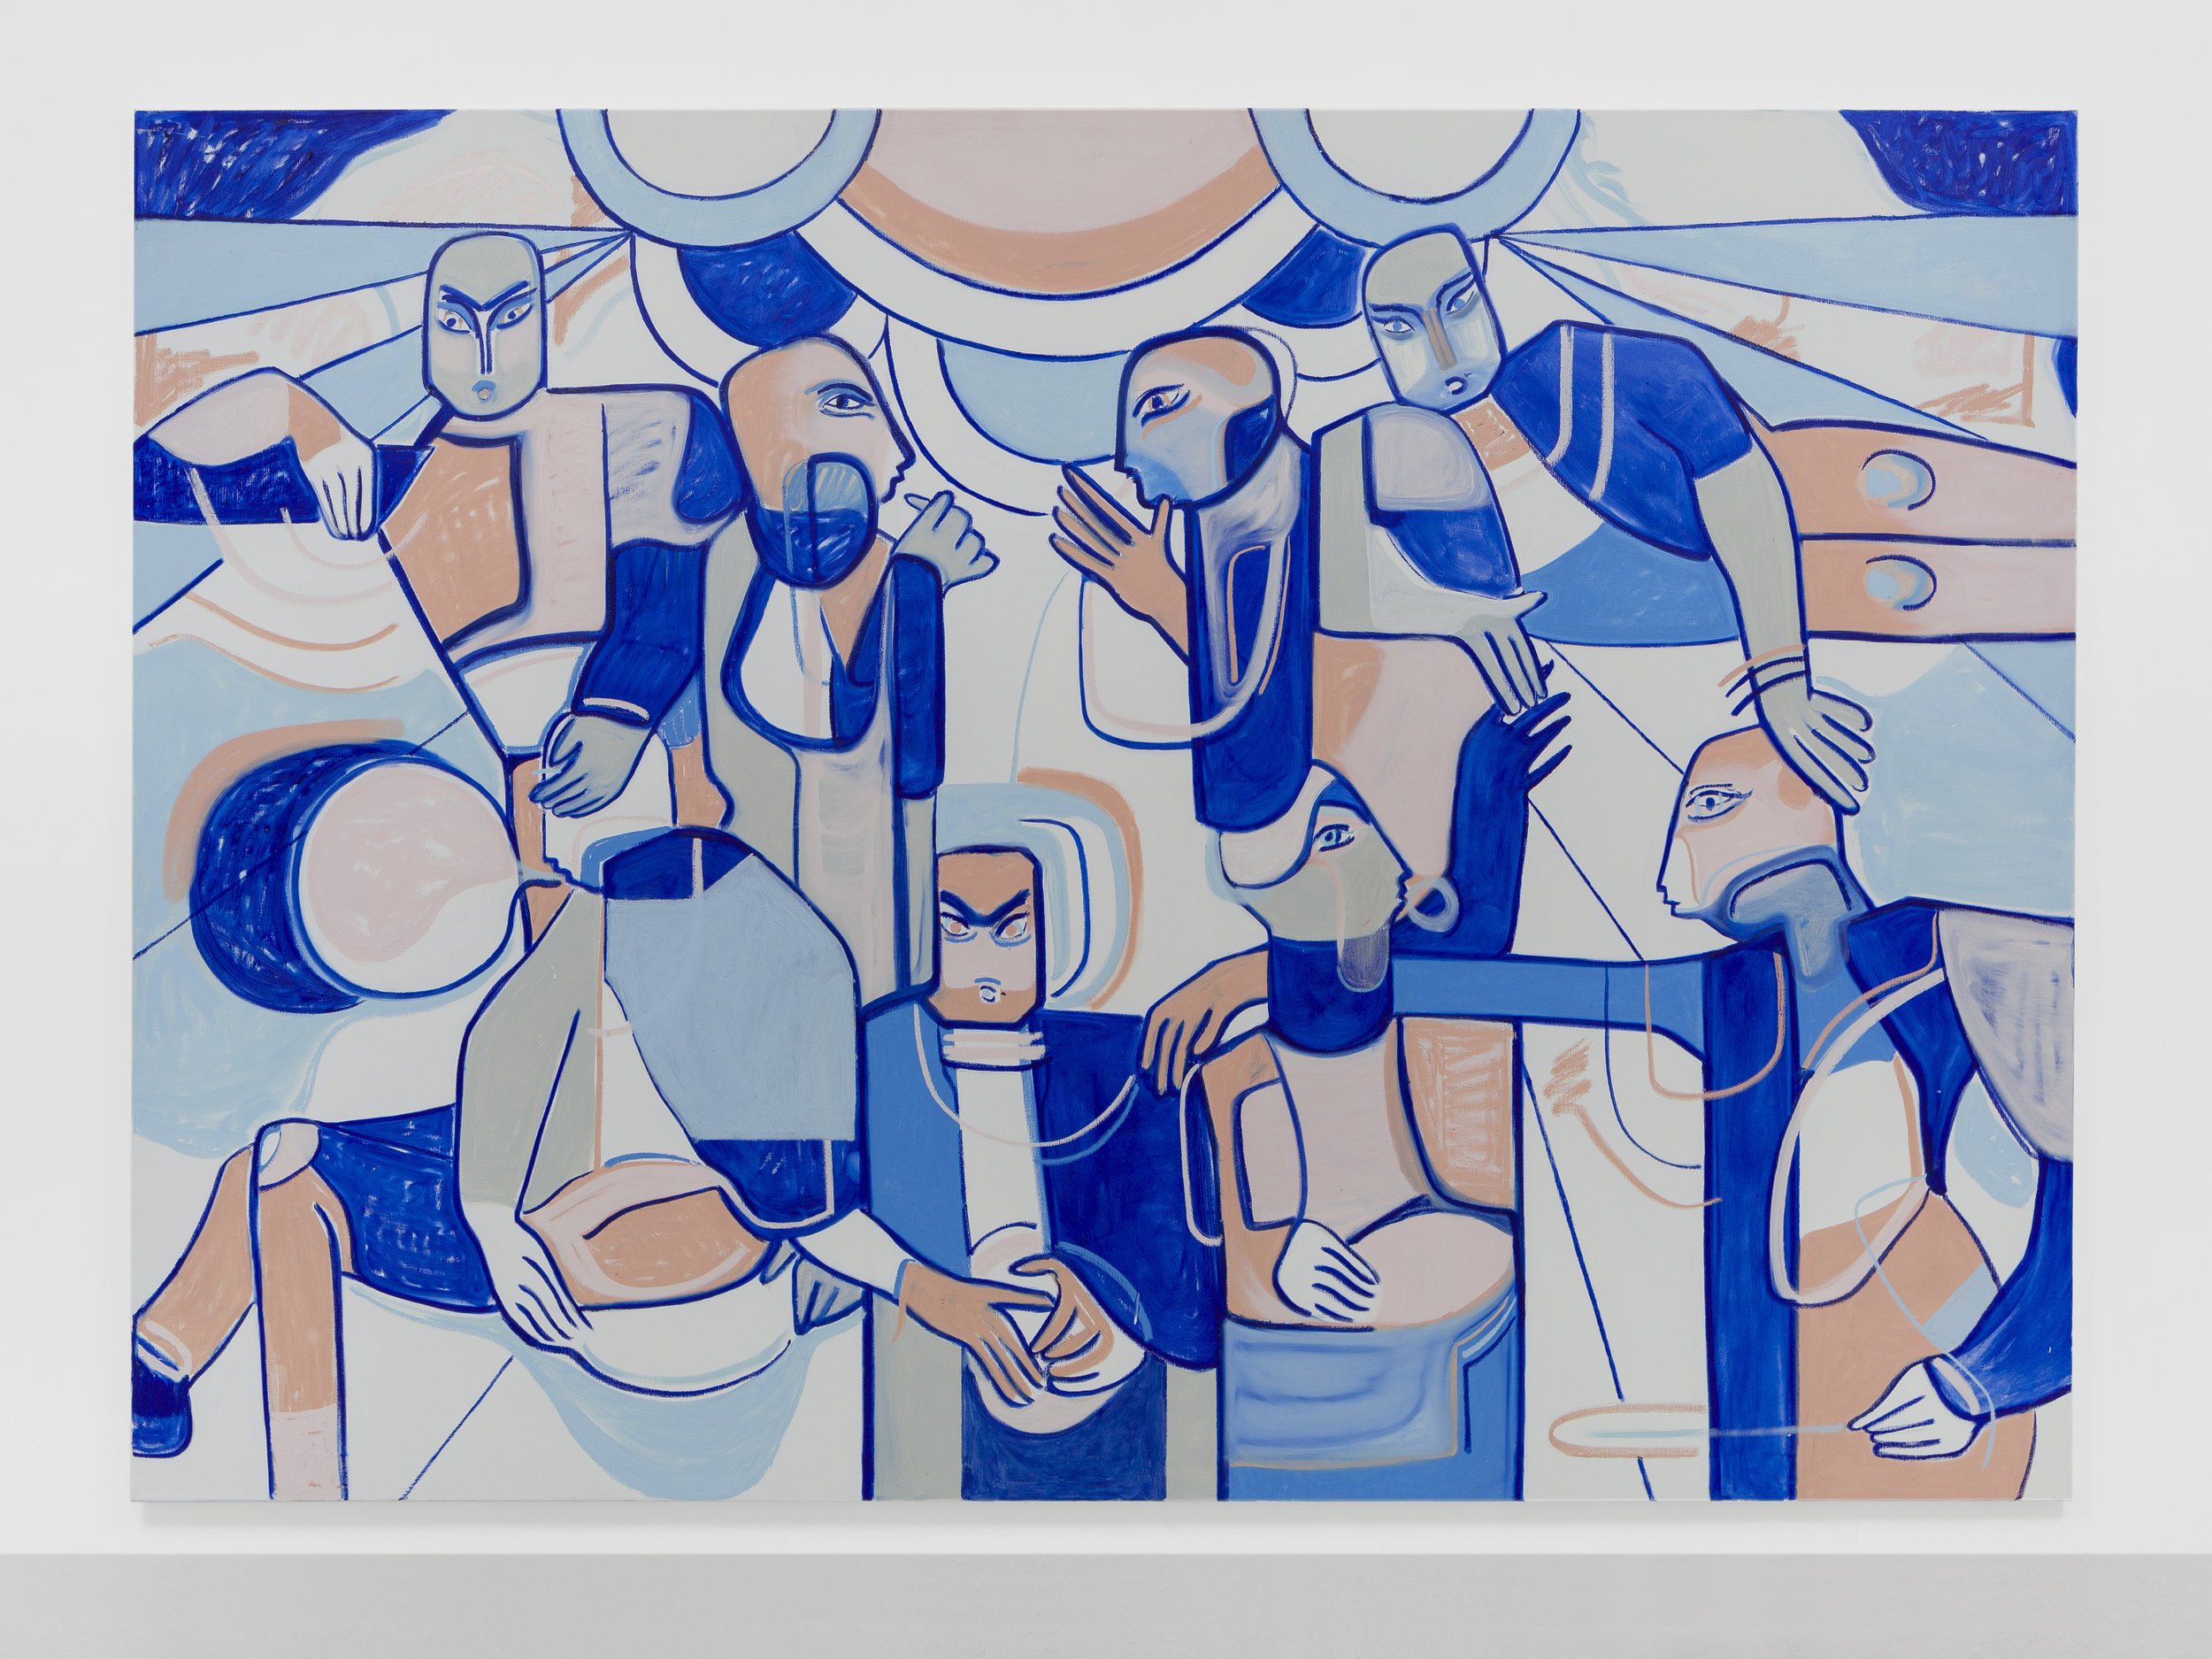  Melike Kara, What it feels like blue, 2019, ol stick and acrylic on canvas, 200 x 280 cm @Ollie Hammick 